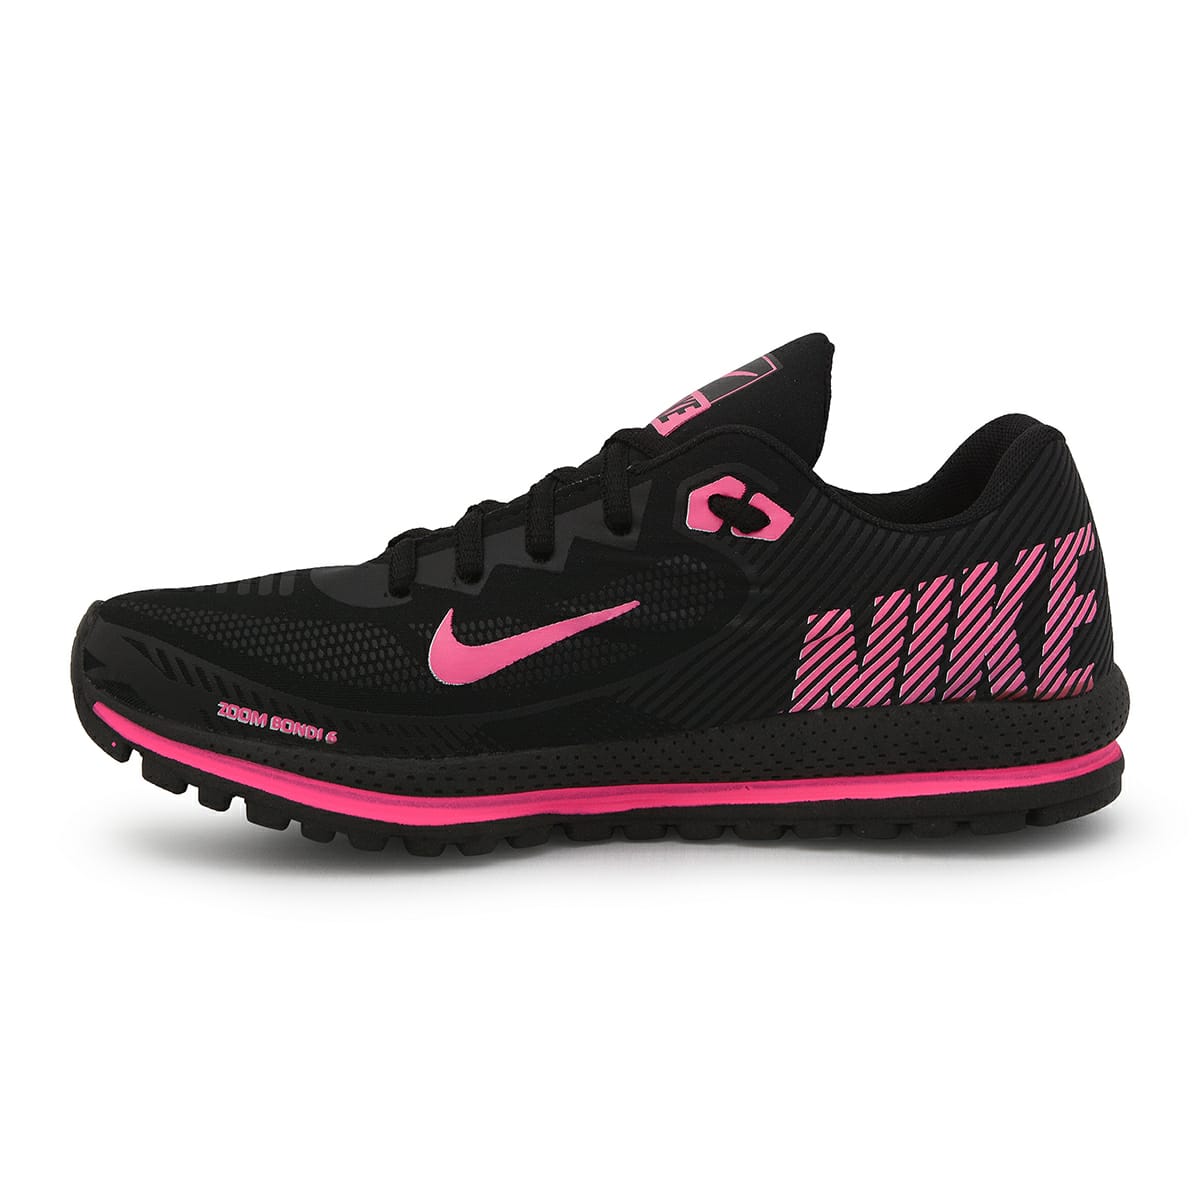 Tênis Nike Zoom Bondi 6 - Preto/Rosa